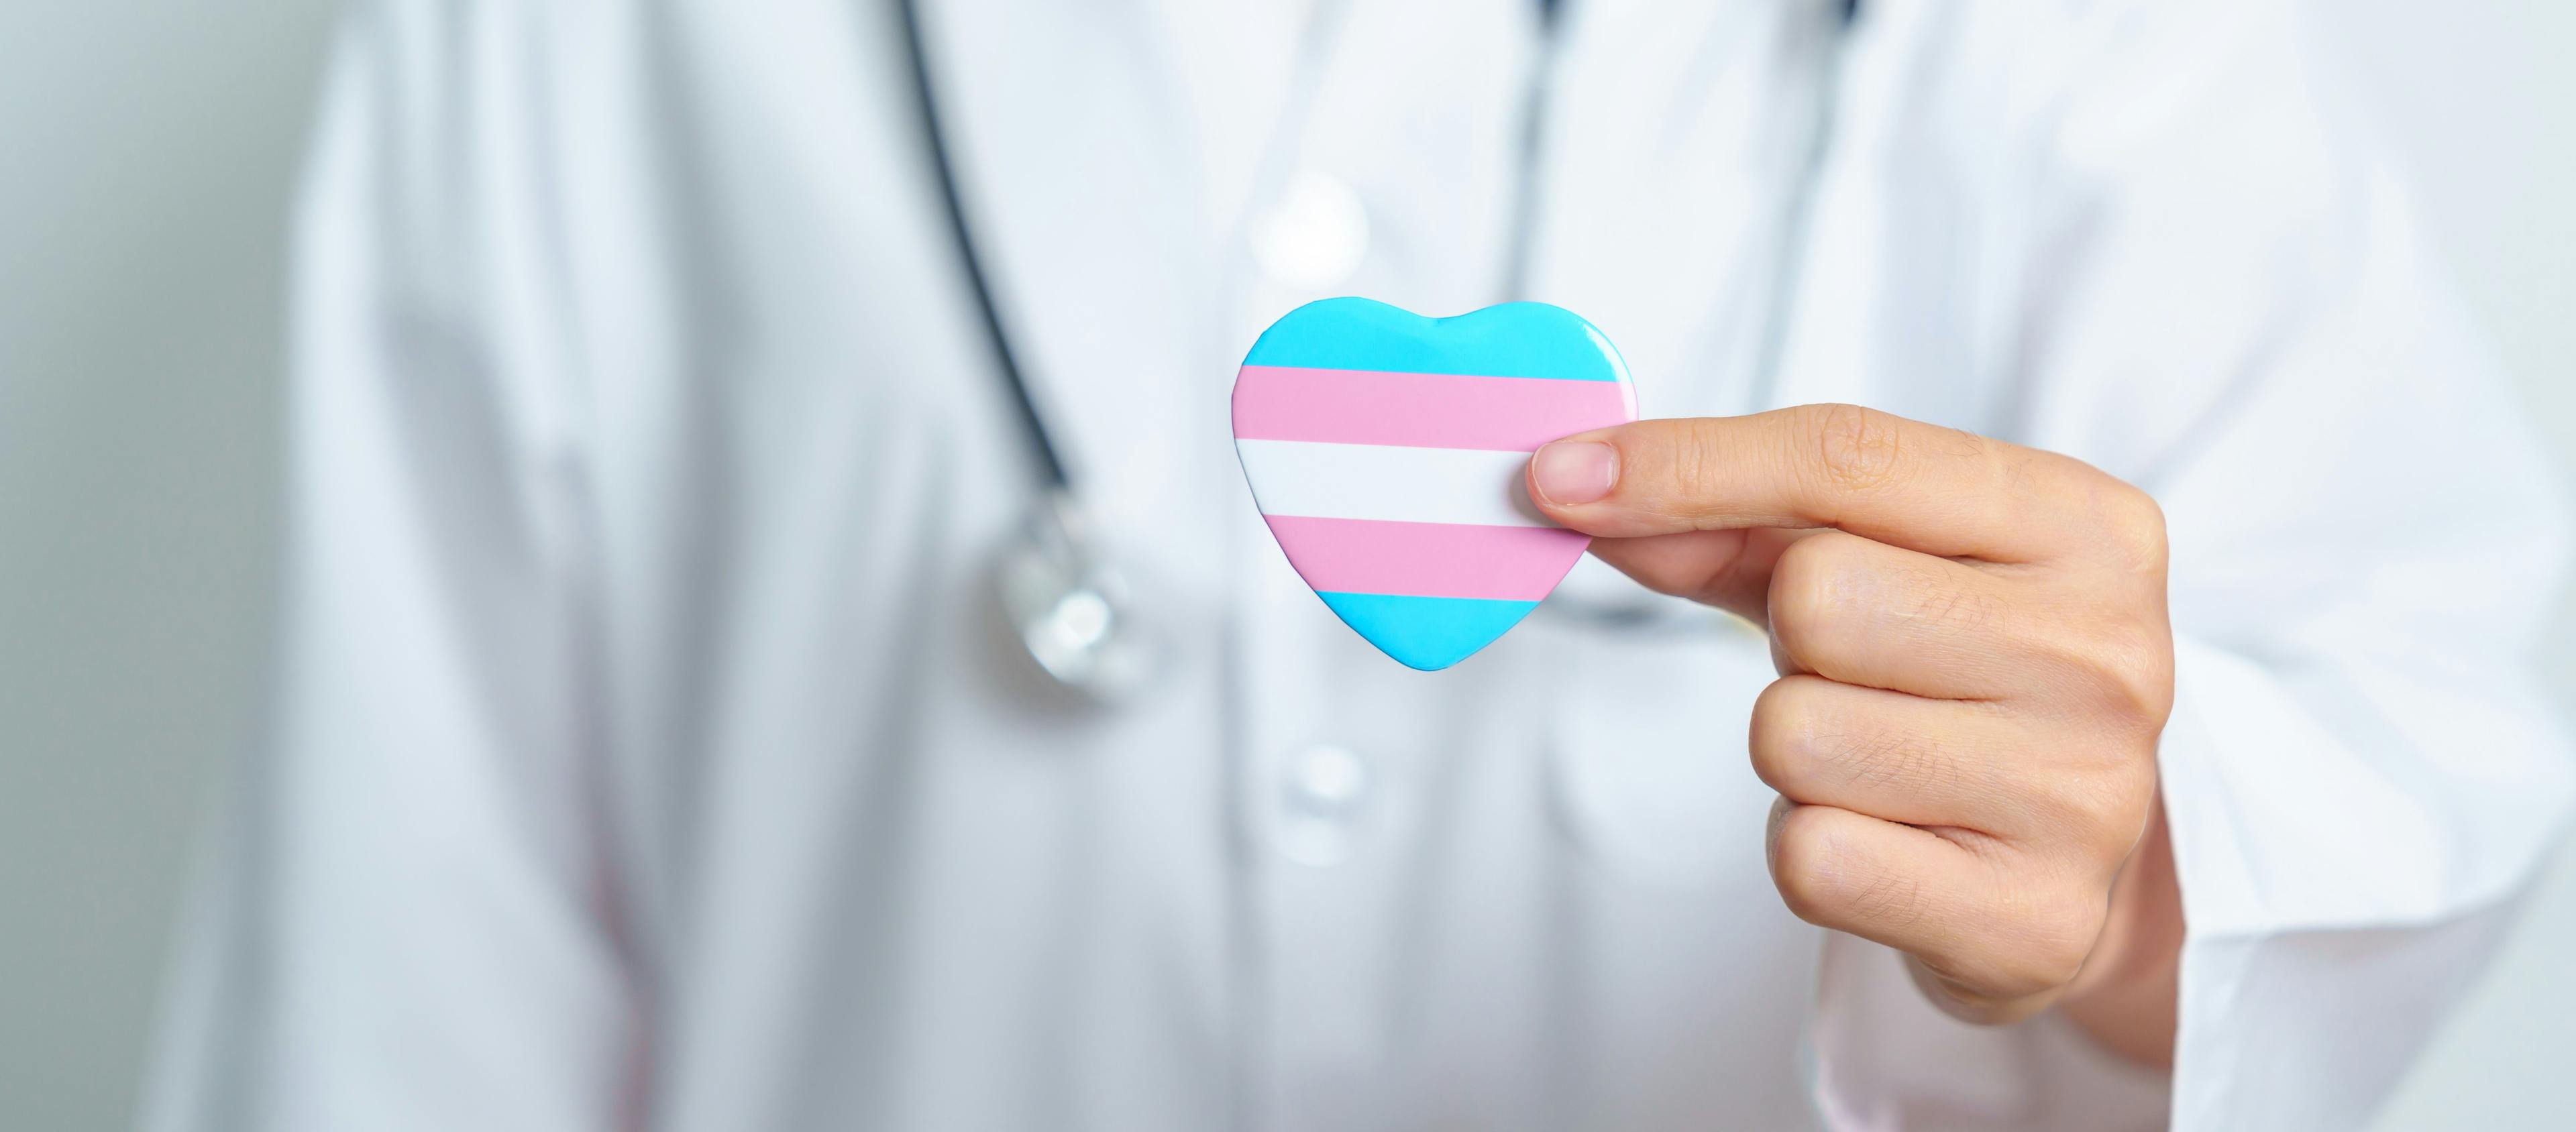 Clinician Holding Transgender Pride Pin | image credit: Jo Panuwat D - stock.adobe.com